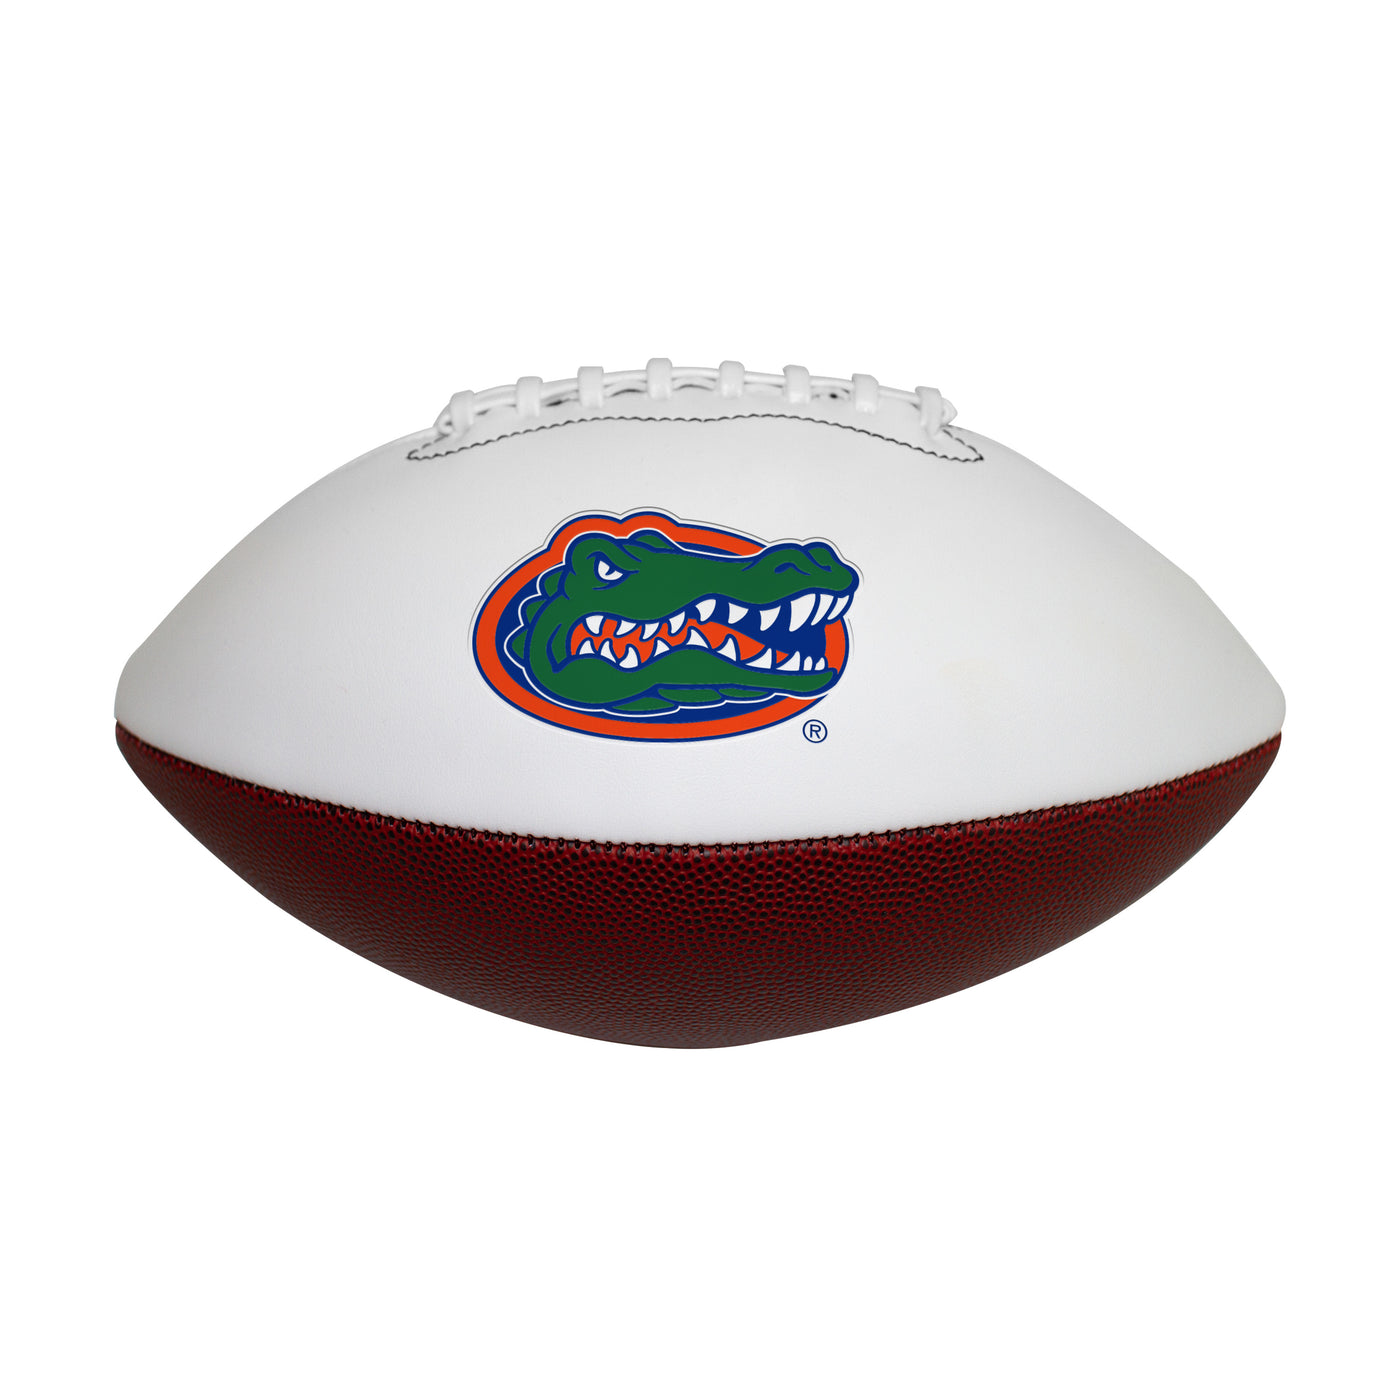 Florida Official-Size Autograph Football